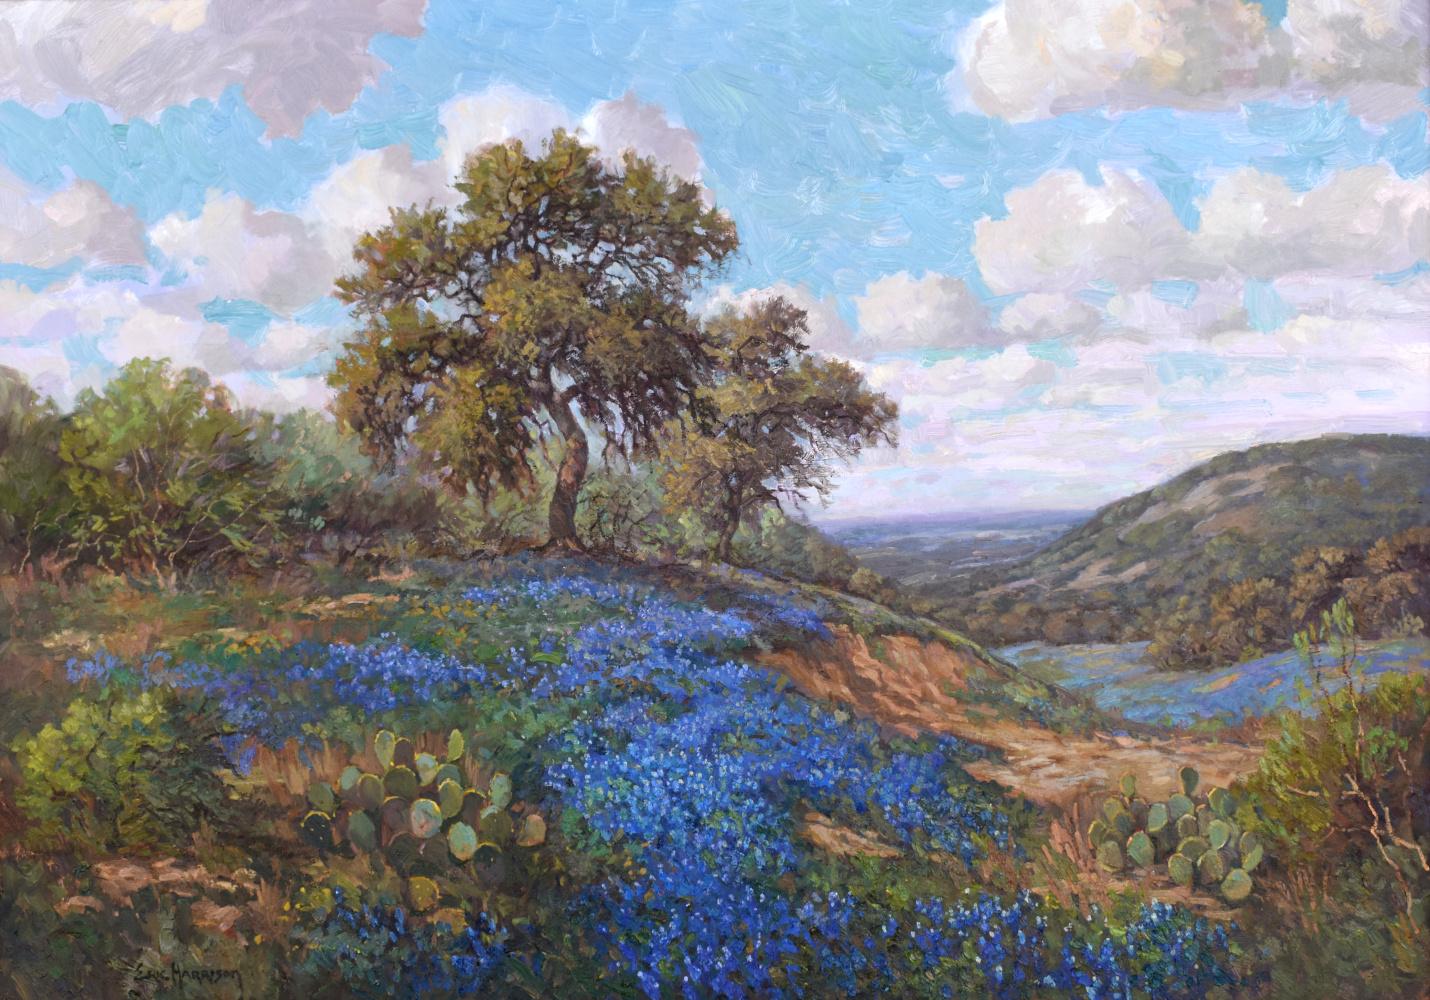 Landscape Painting Eric Harrison - "CERULEAN SPRING" BLUEBONNETS ERIC HARRISON, TEXAS HILL COUNTRY LANDSCAPE